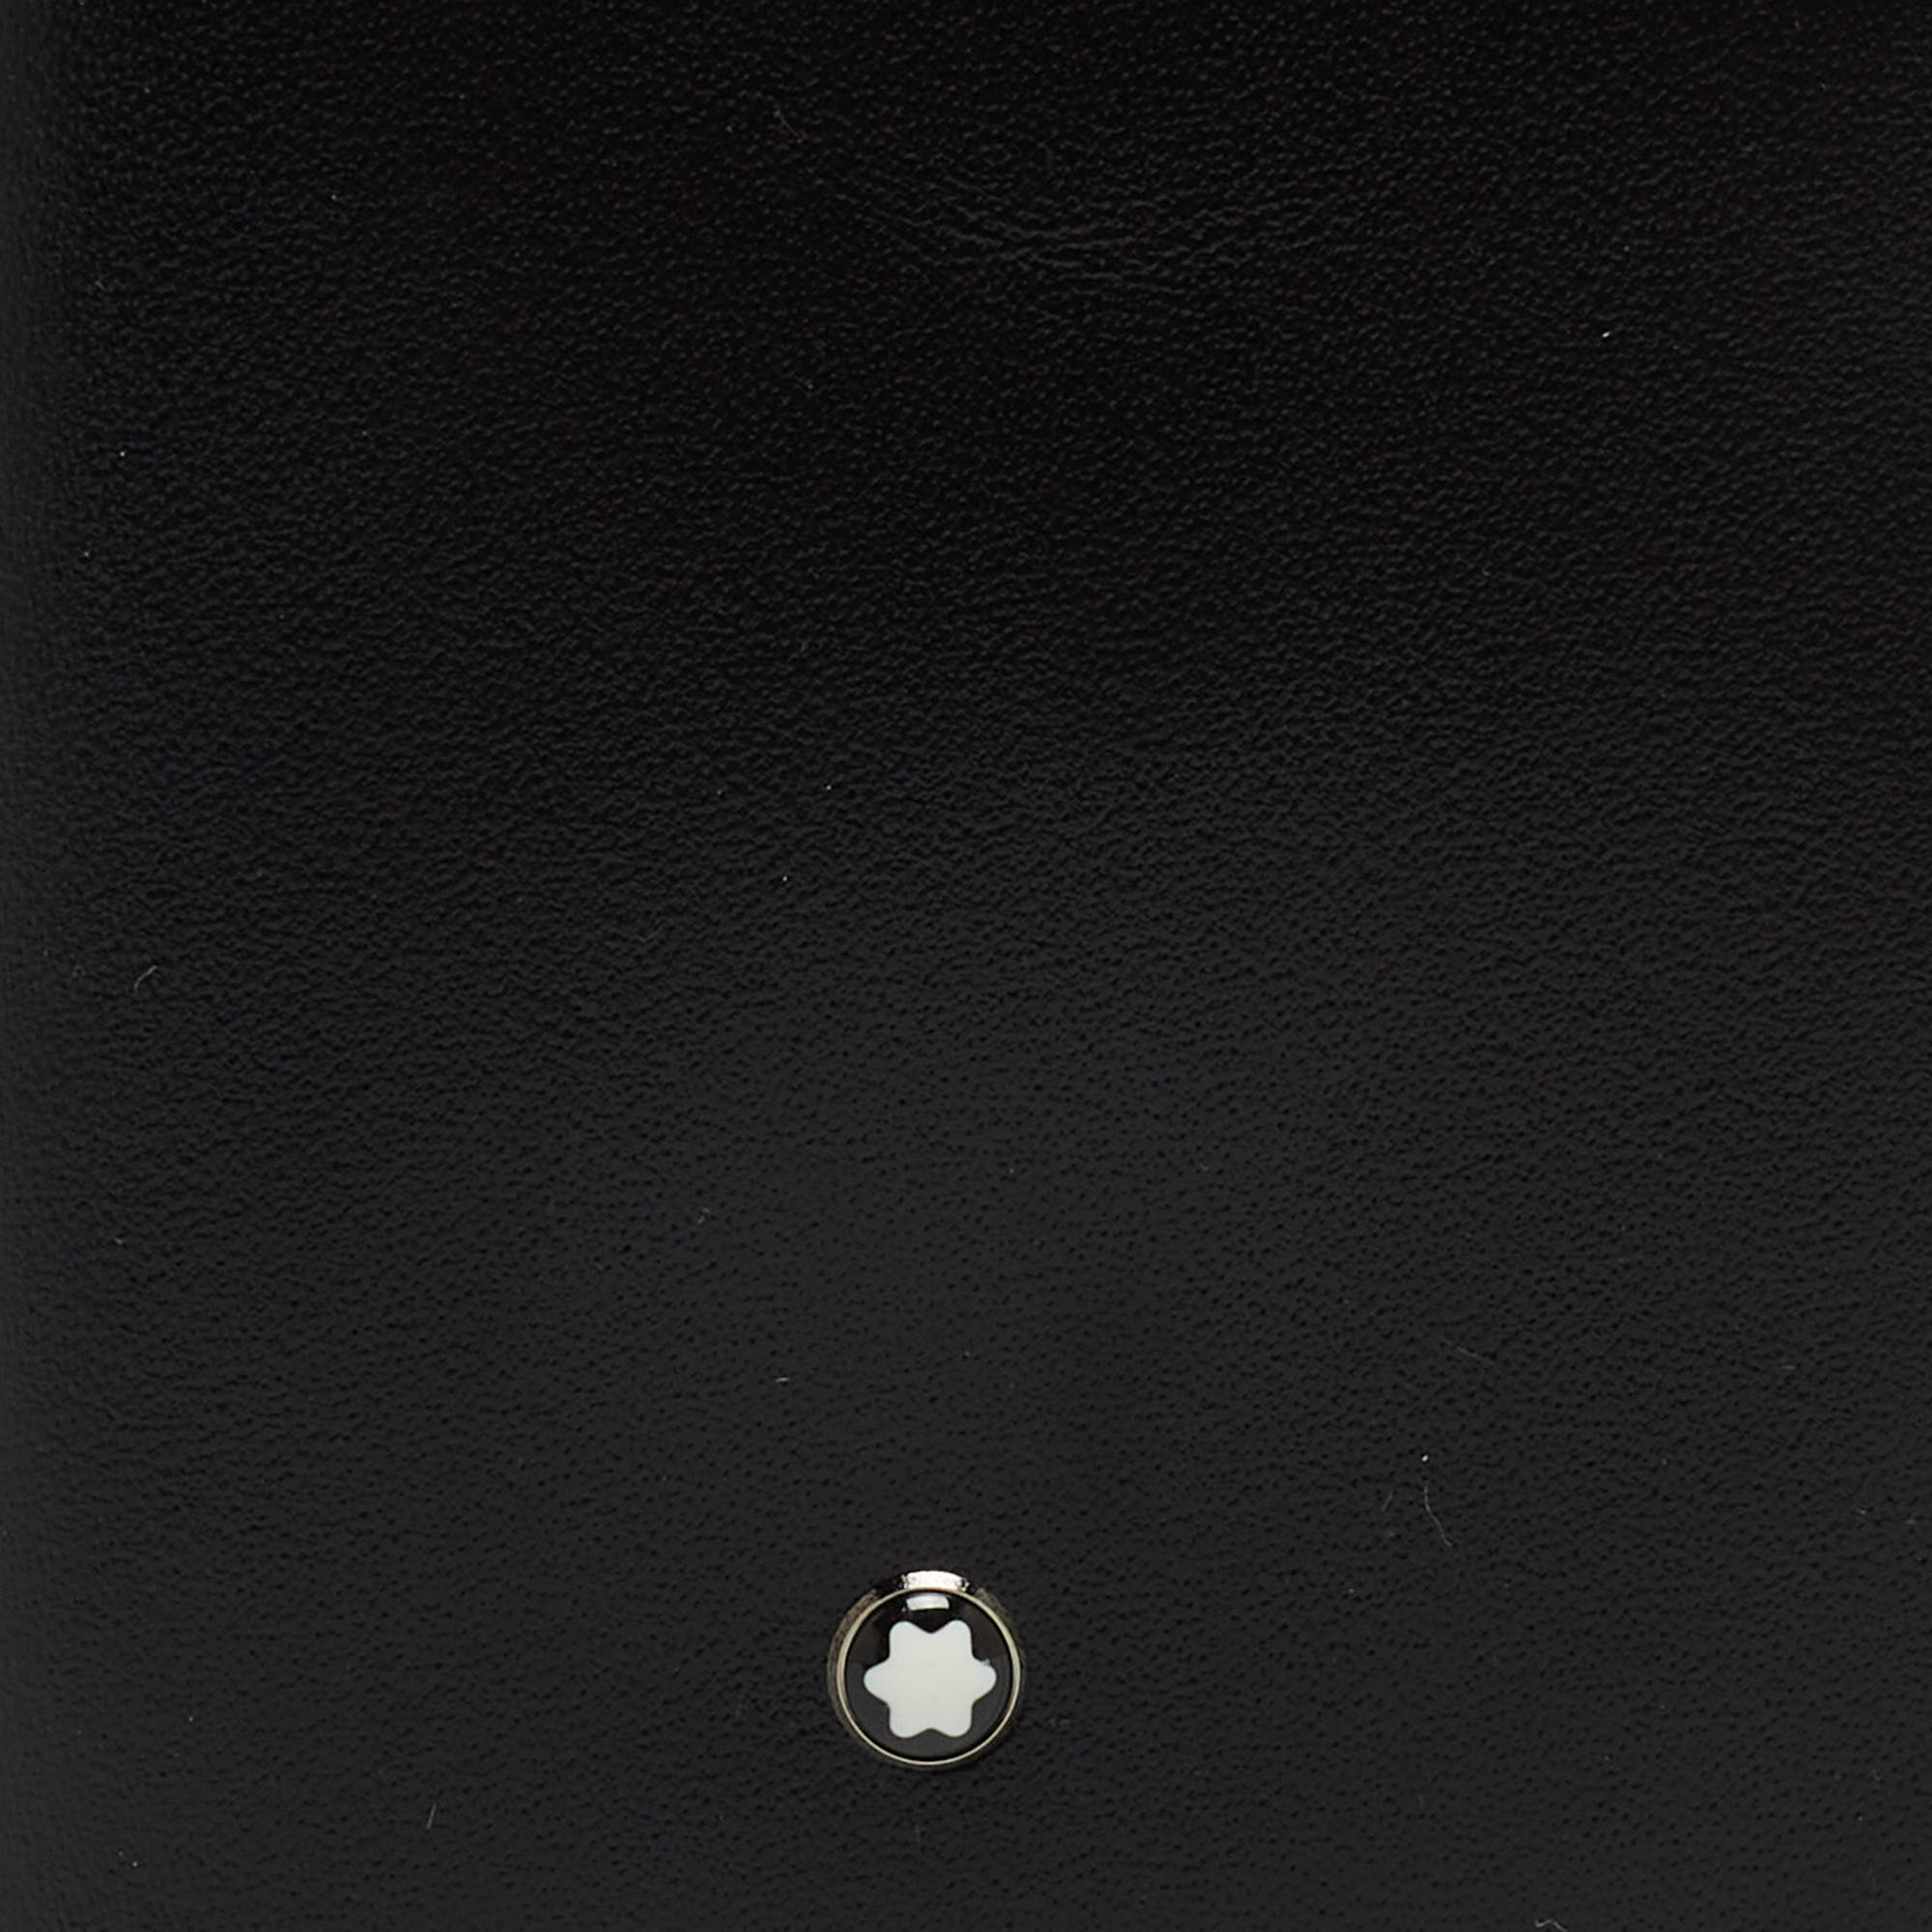 Montblanc Black Leather Meisterstück Pocket Notebook